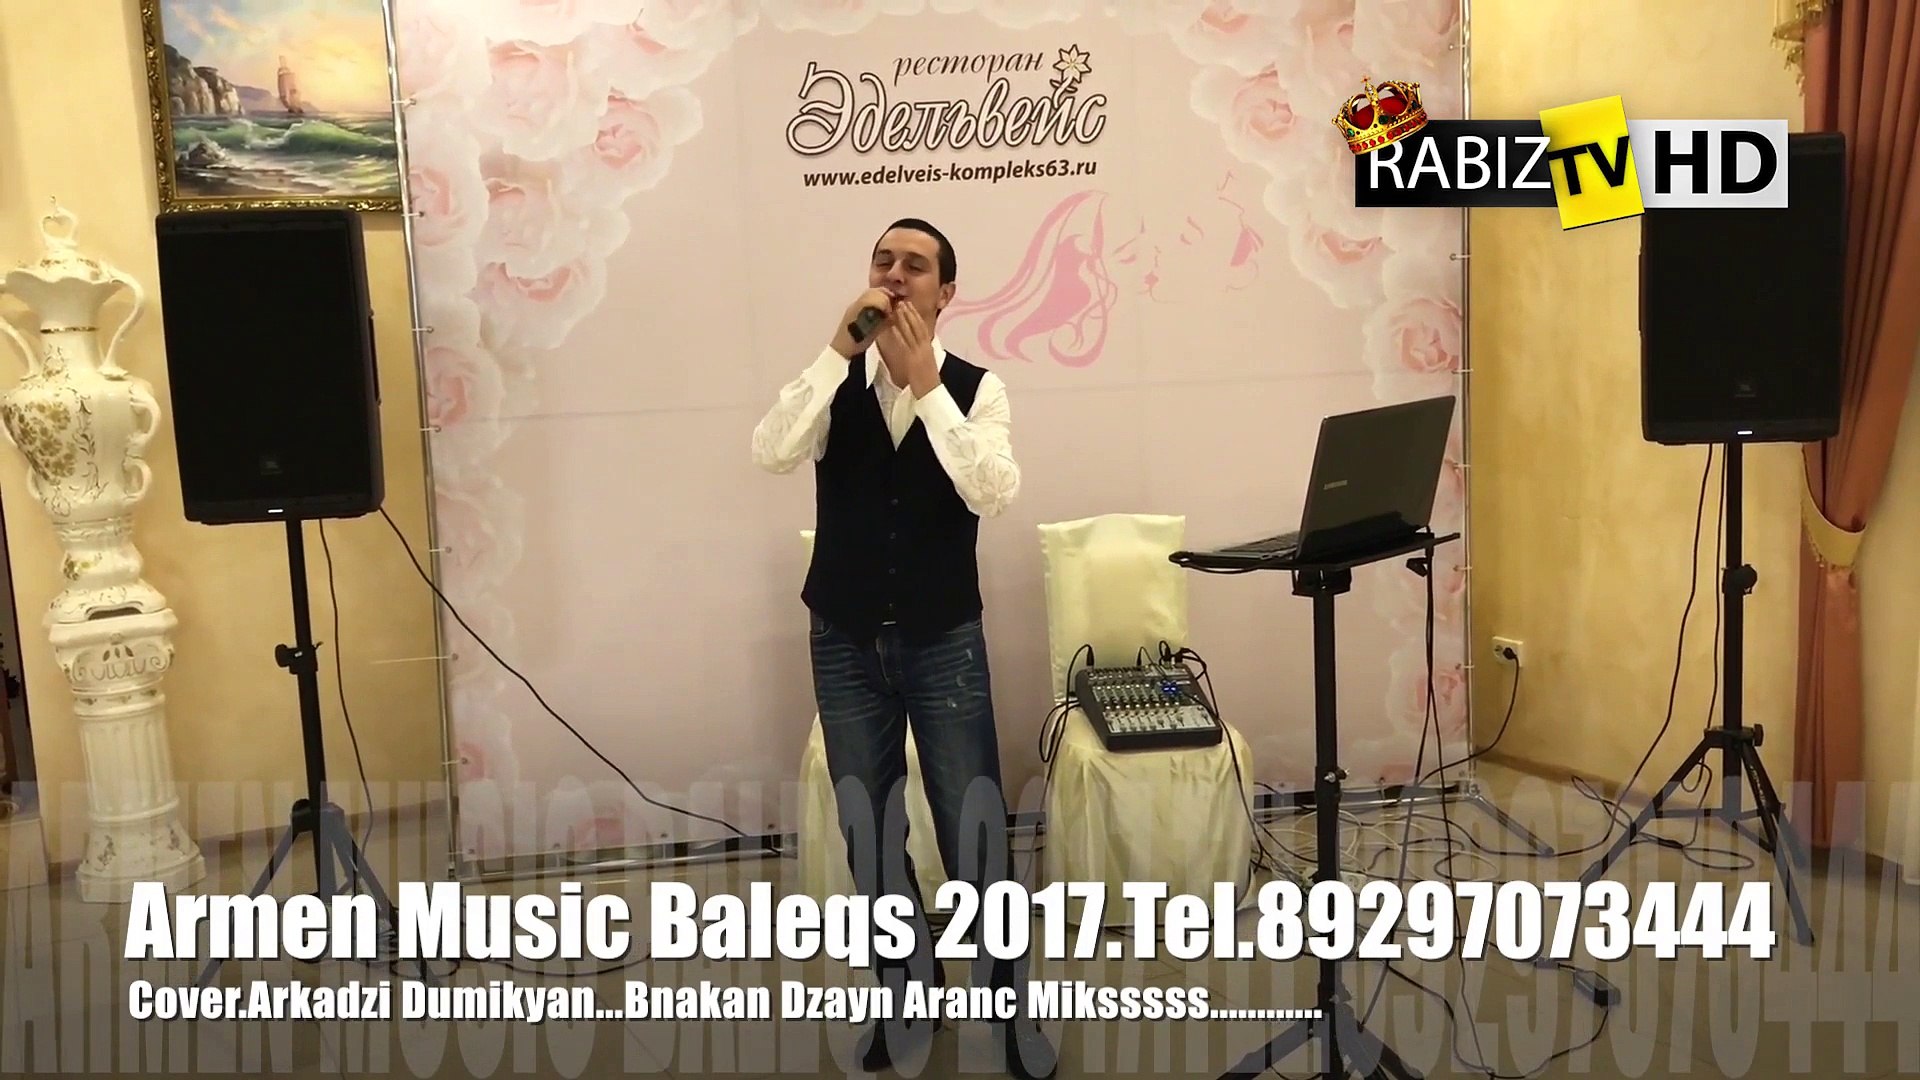 Armen Music Baleqis 2017 EXCLUSIVE RABIZ TV VEVO - RABIZ TV PREMIUM HD VEVO